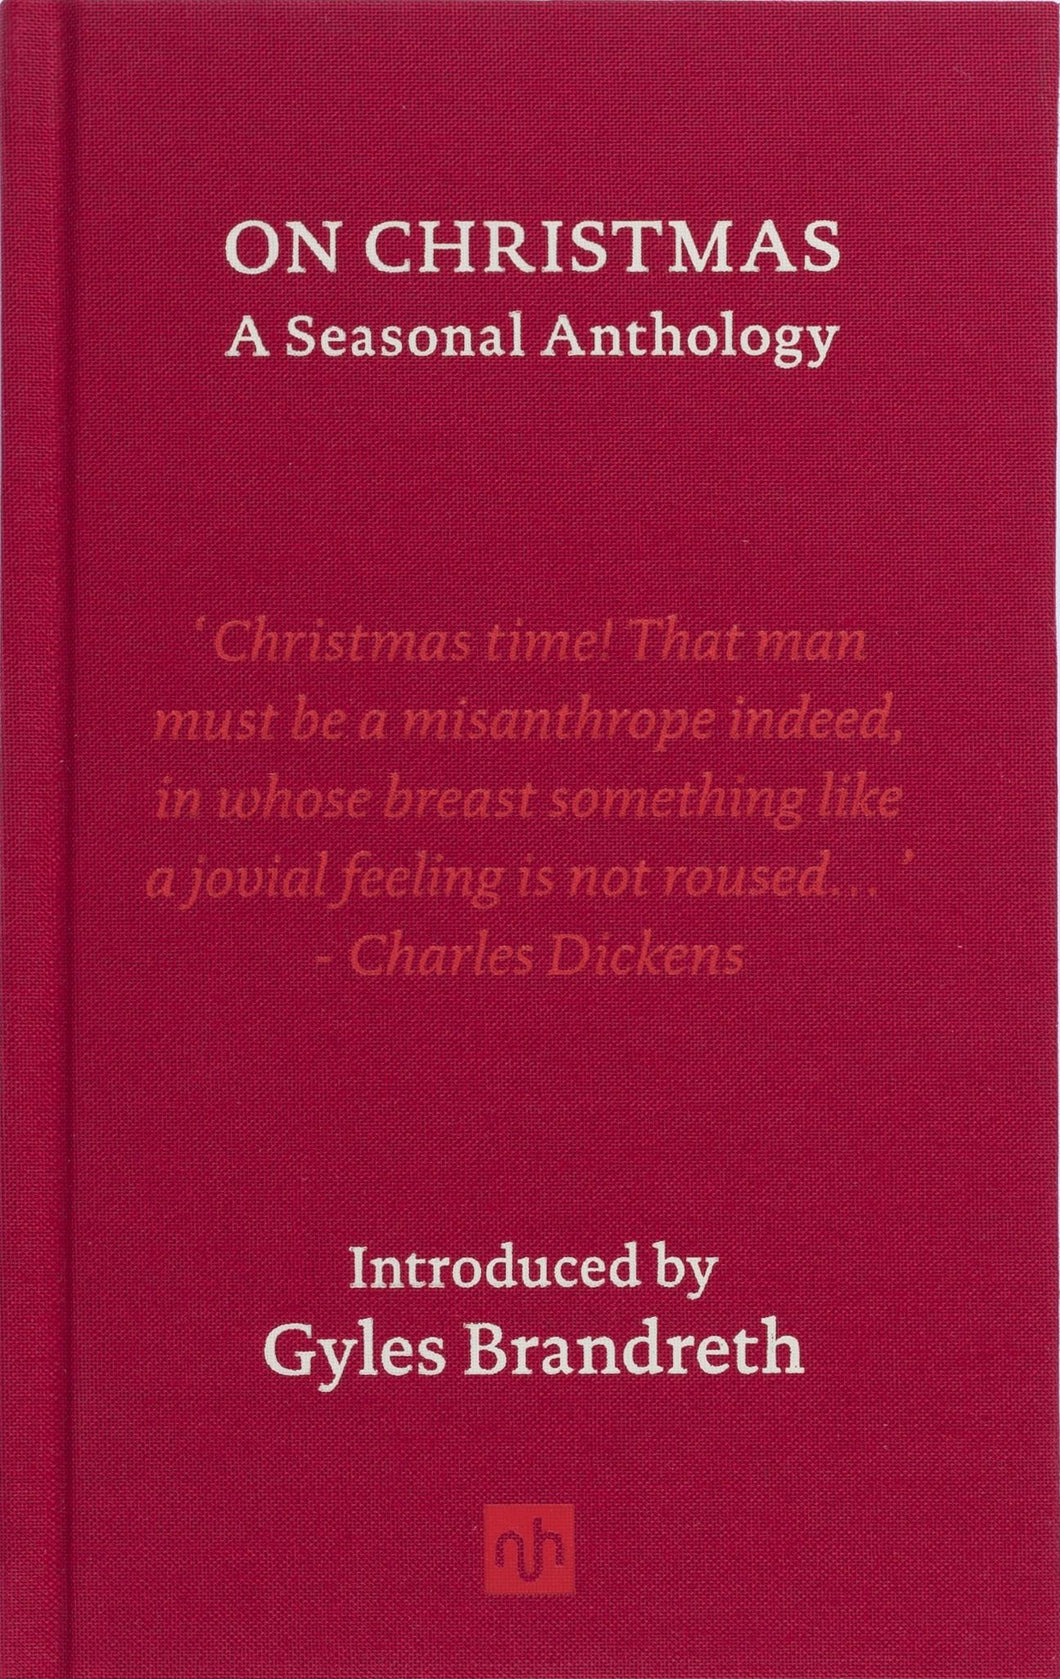 On Christmas: A Seasonal Anthology ร้านหนังสือและสิ่งของ เป็นร้านหนังสือภาษาอังกฤษหายาก และร้านกาแฟ หรือ บุ๊คคาเฟ่ ตั้งอยู่สุขุมวิท กรุงเทพ